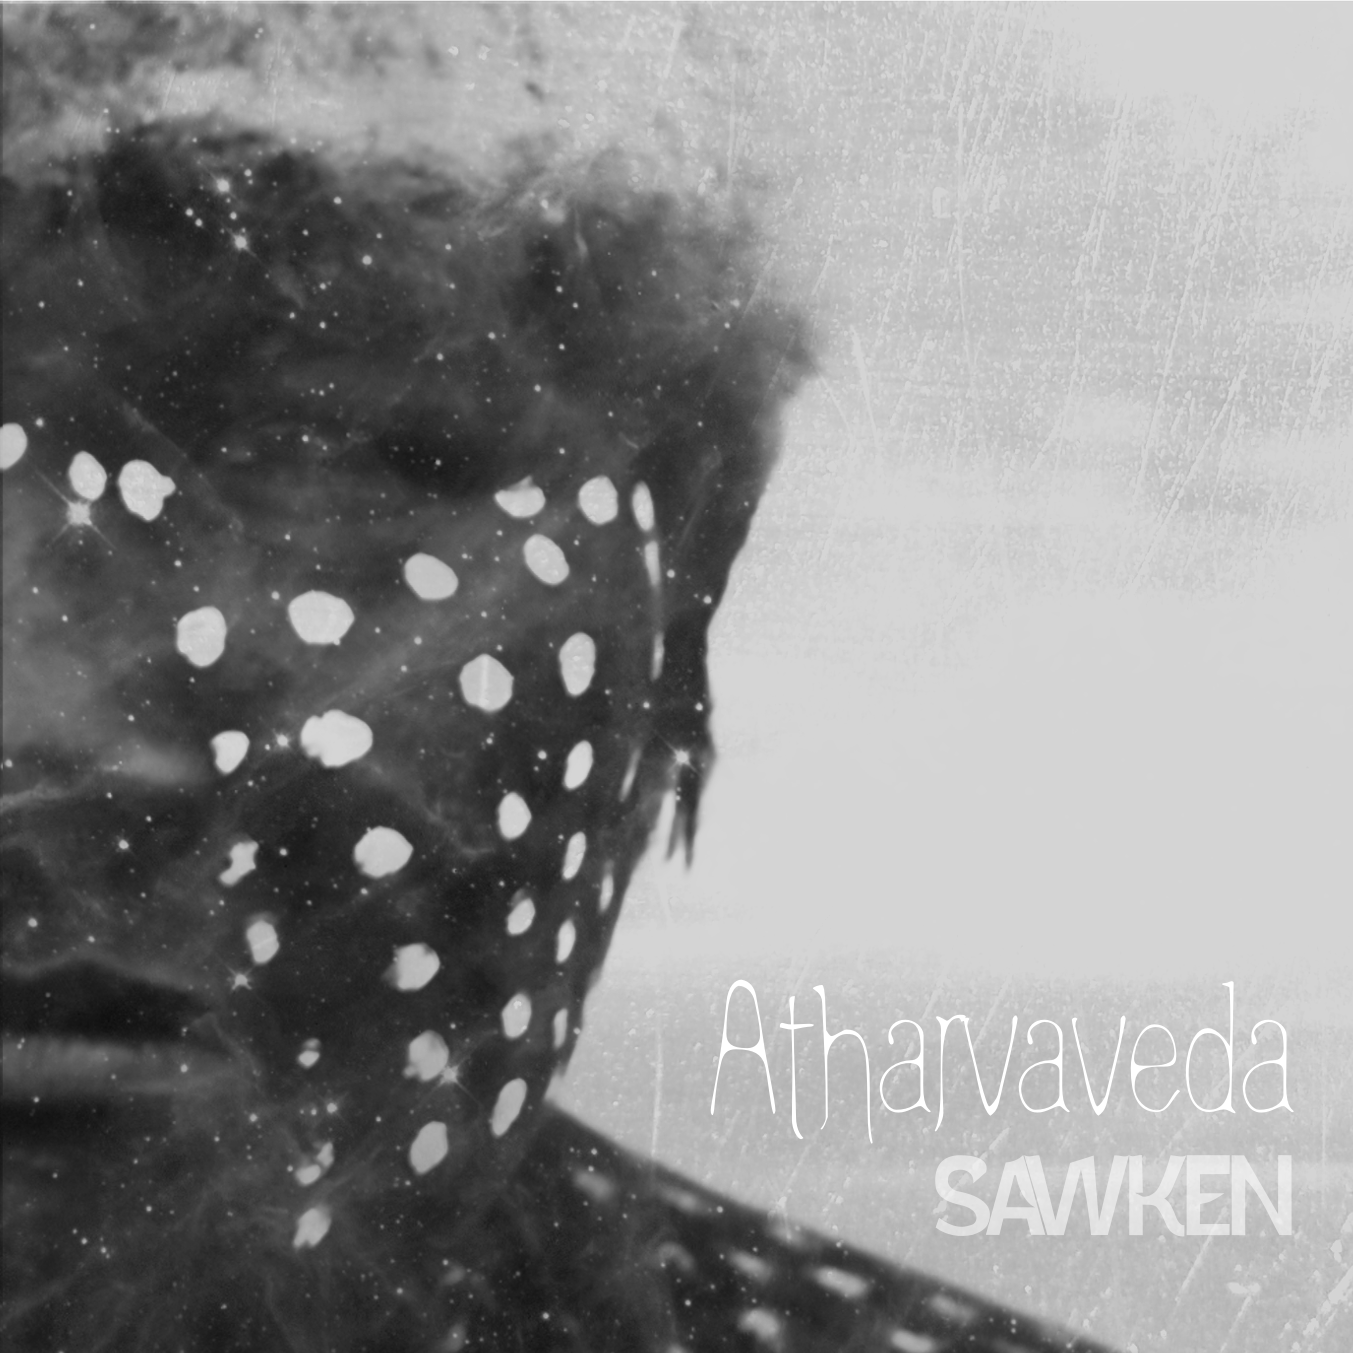 Sawken – Atharvaveda (2018)